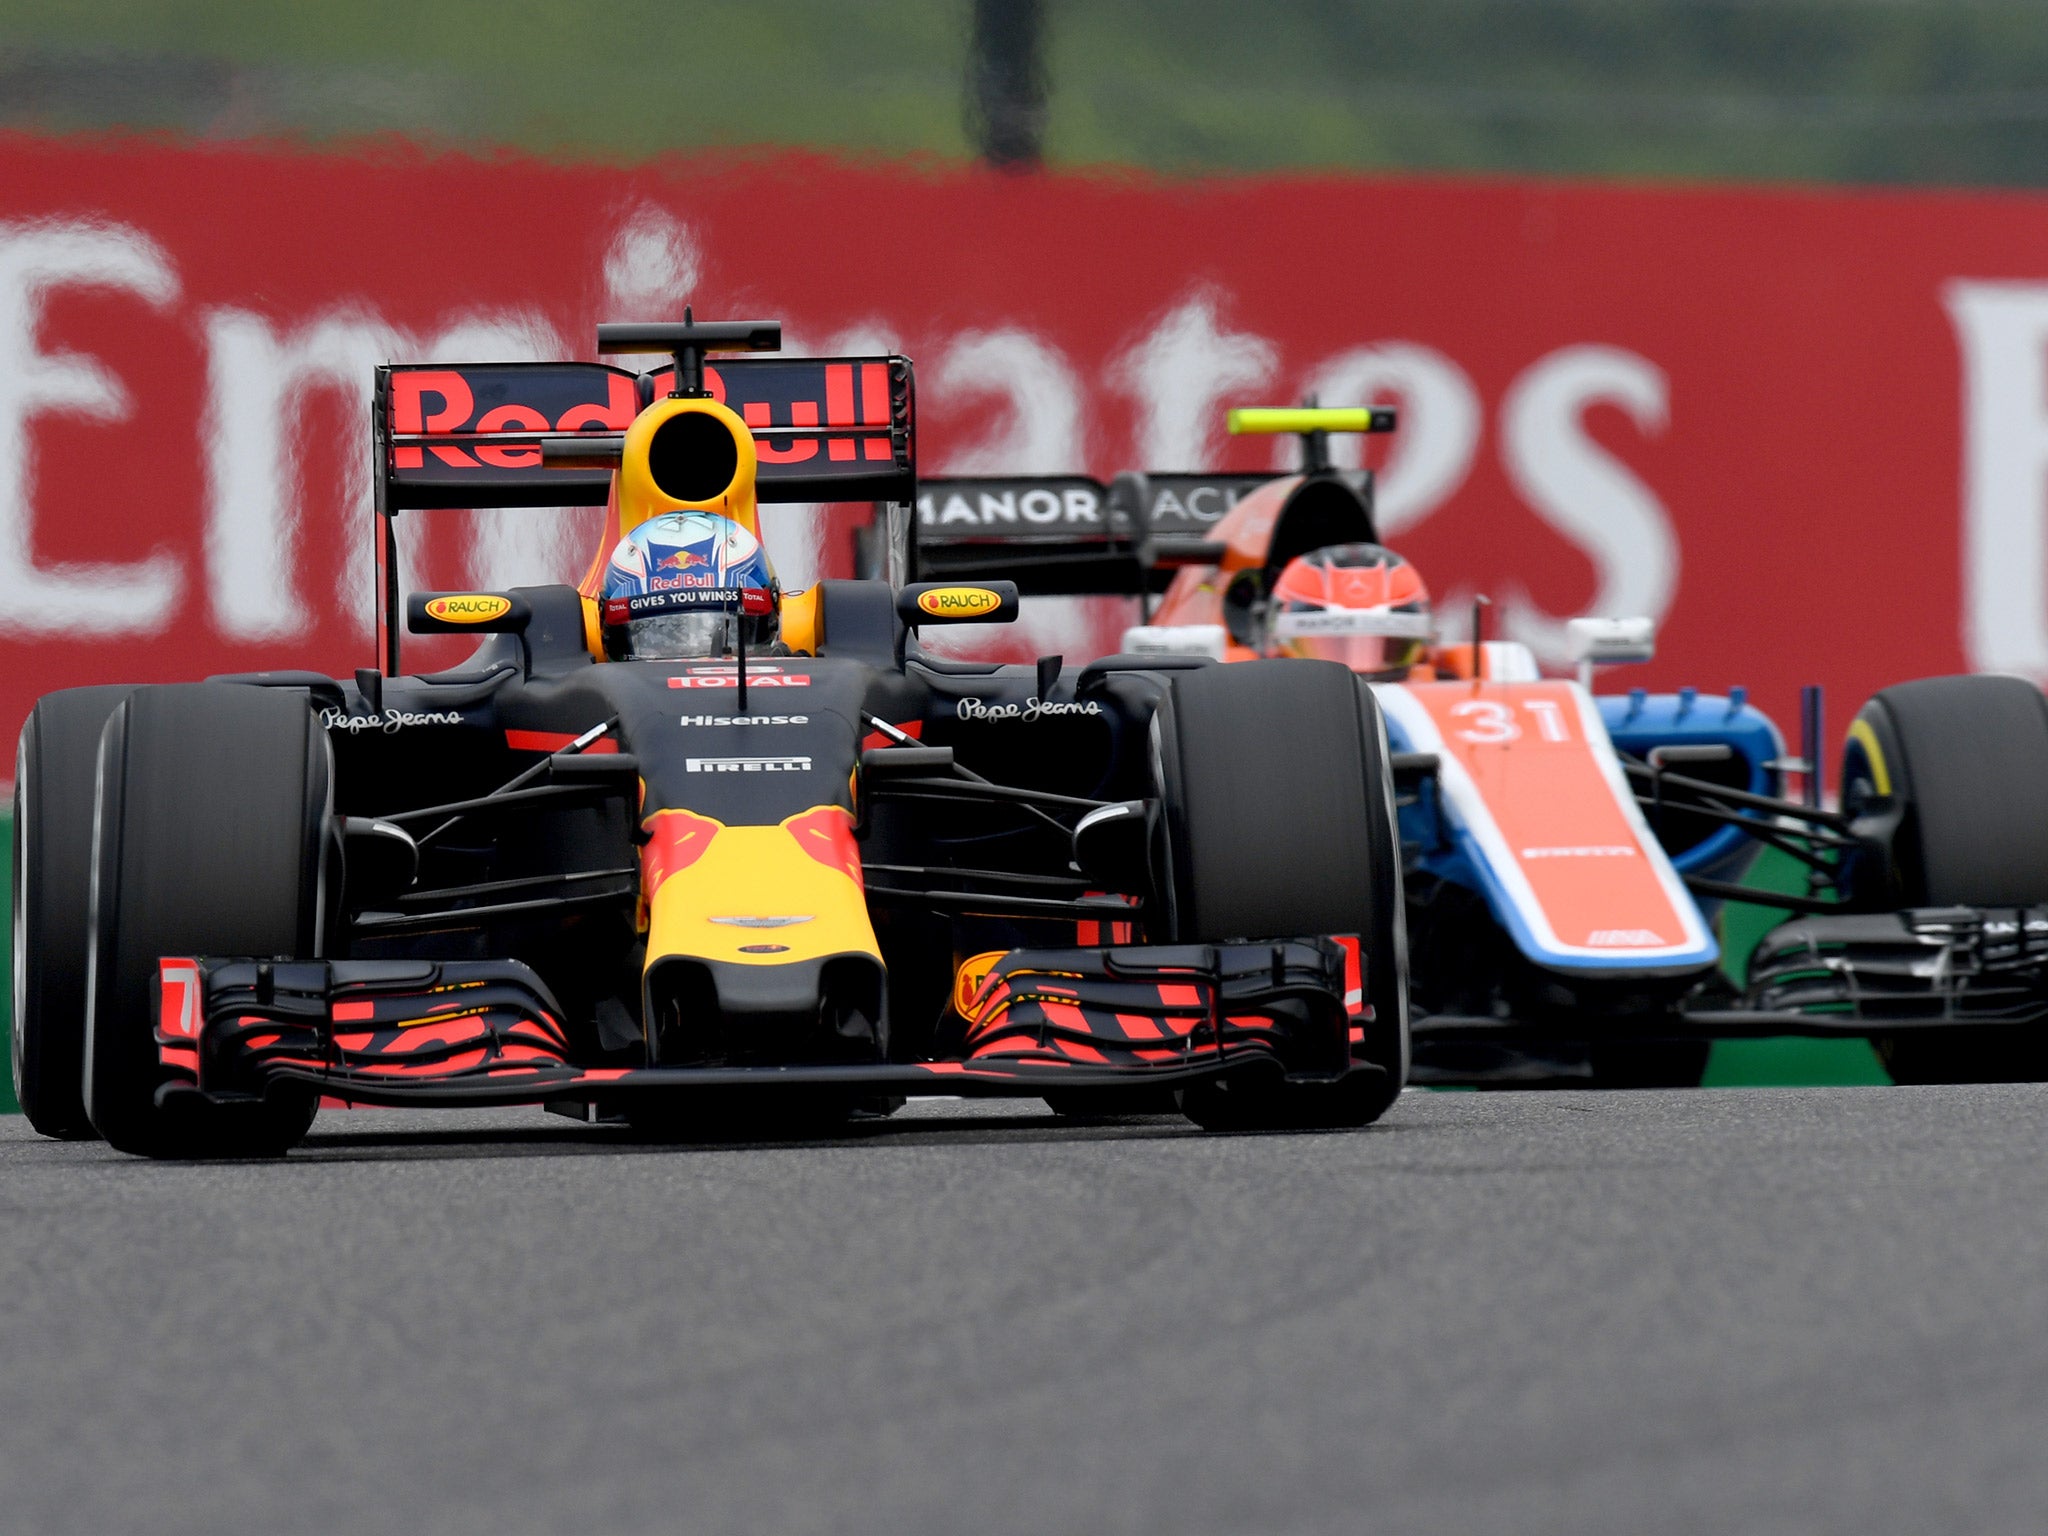 Daniel Ricciardo will start behind his Red Bull teammate Max Verstappen